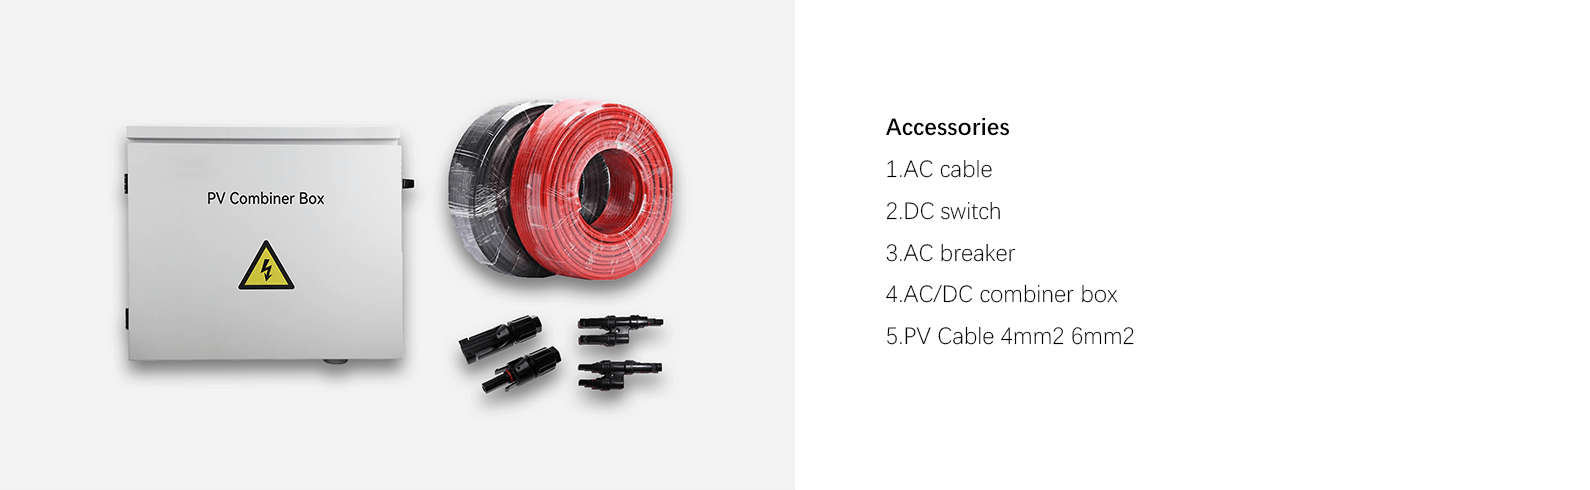 accessories-6